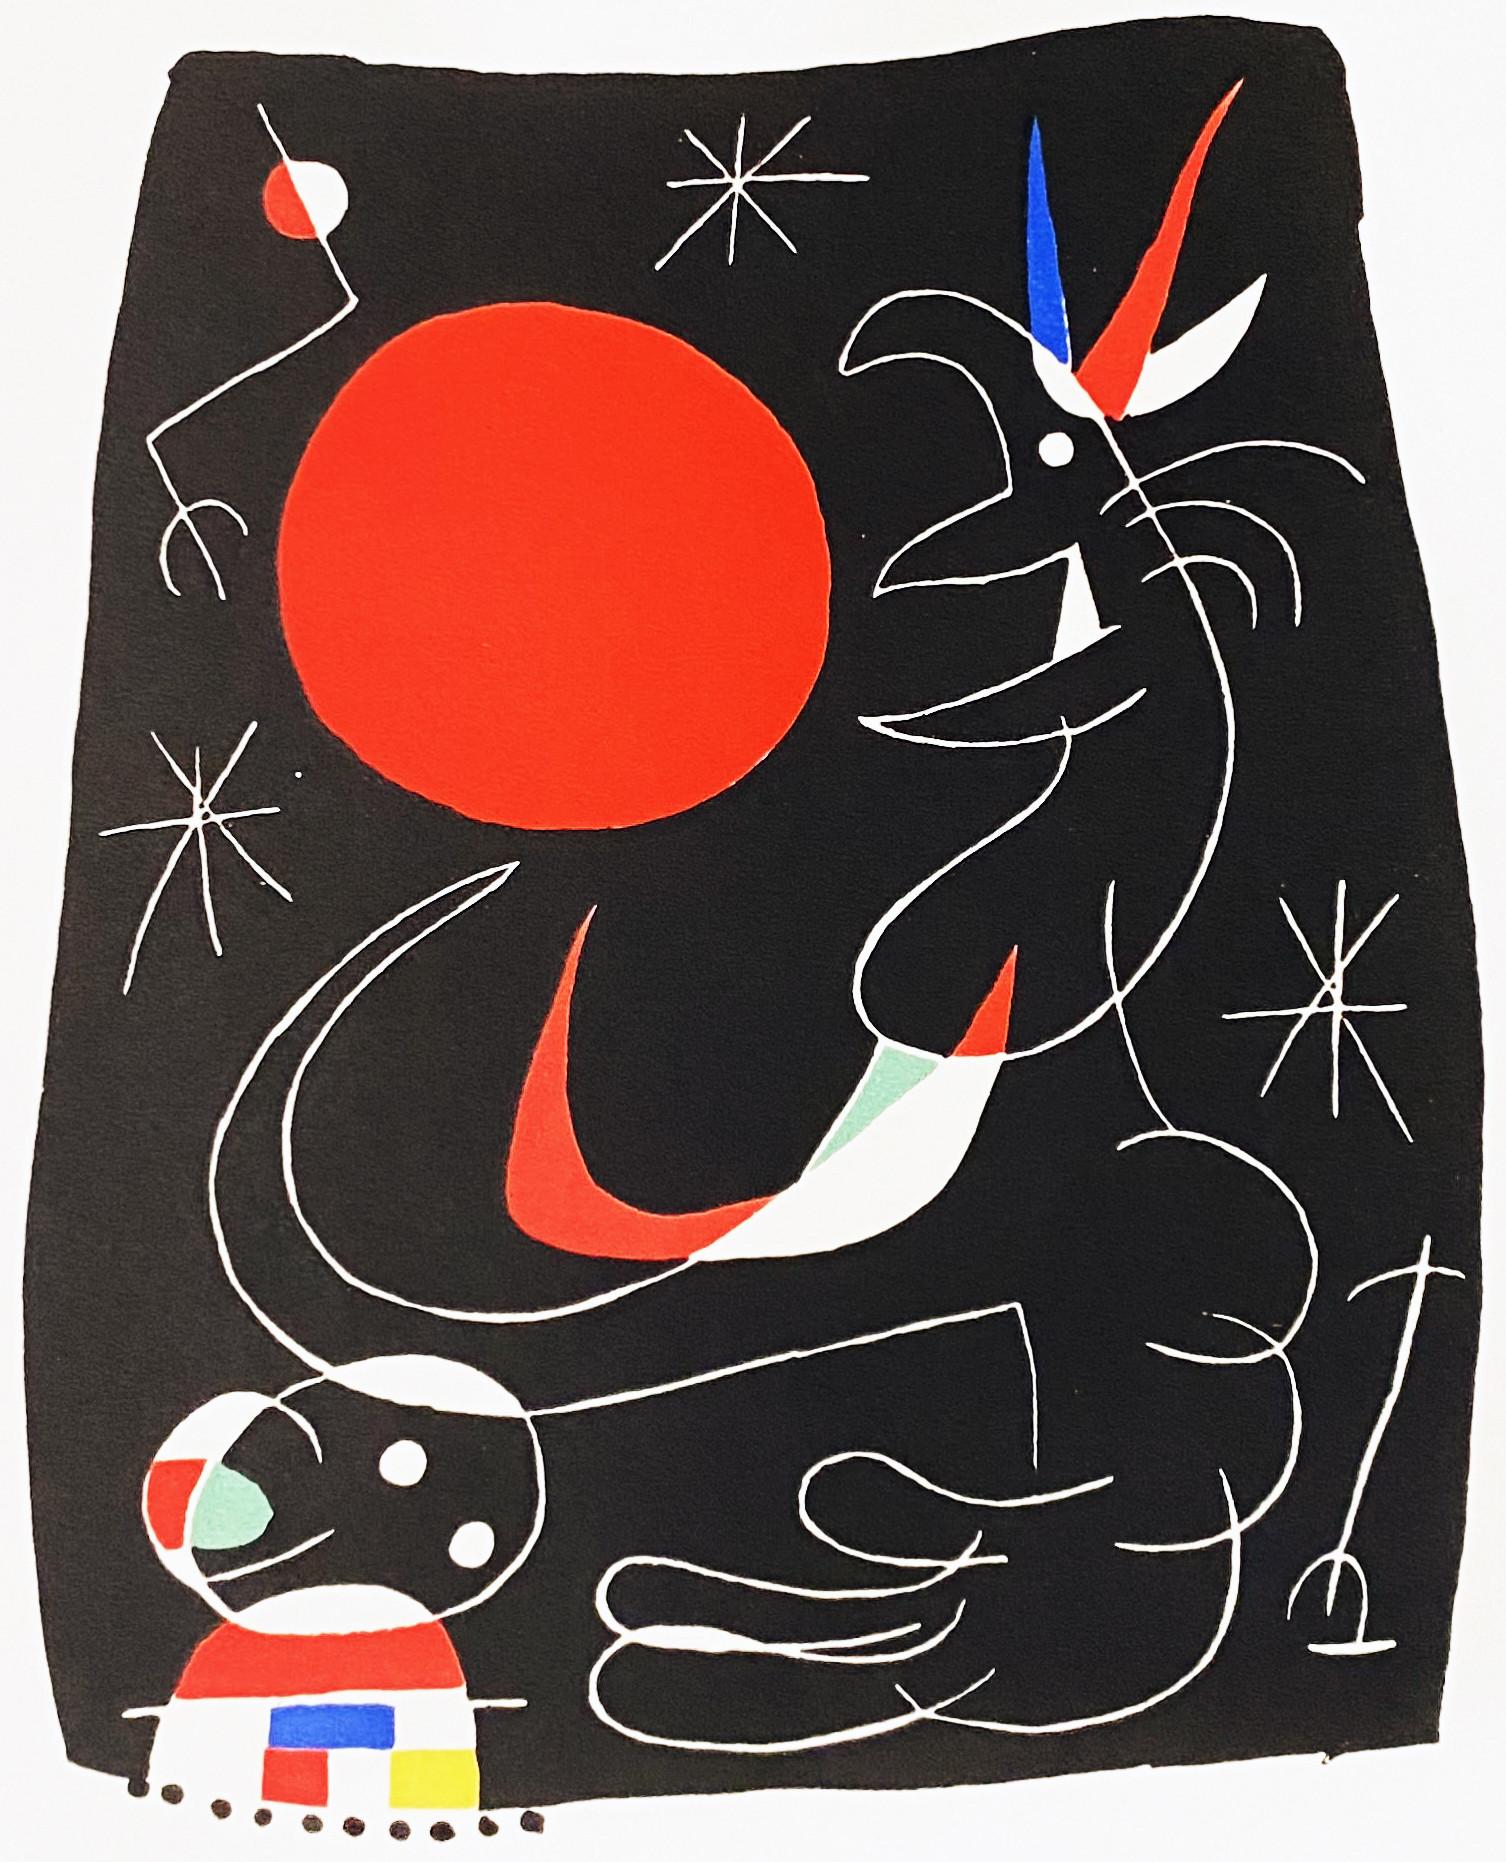 Joan Miro (Plate 4) - Abstract Print by Joan Miró